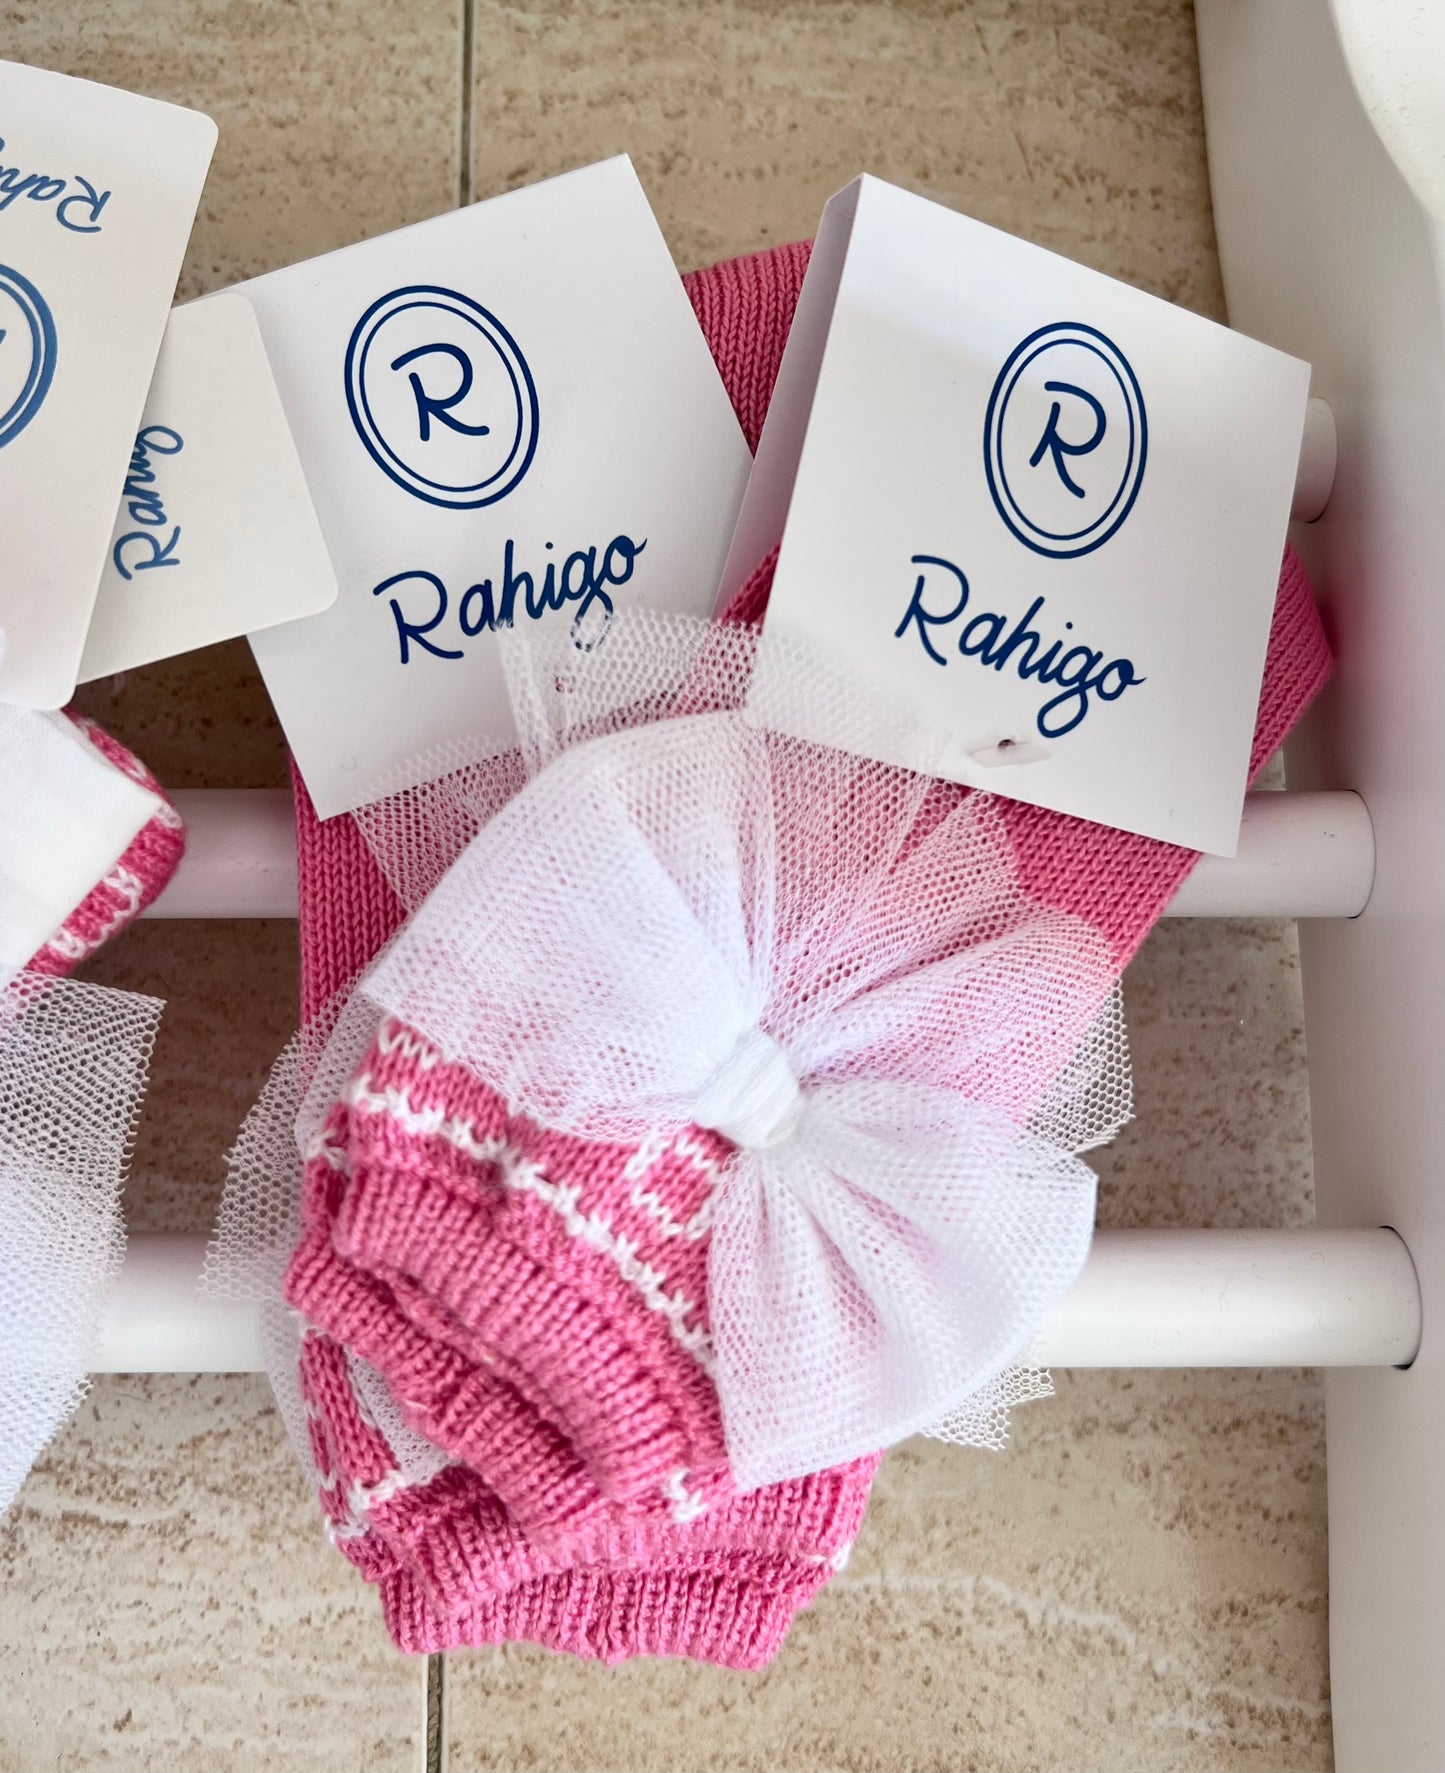 Hot pink Rahigo socks